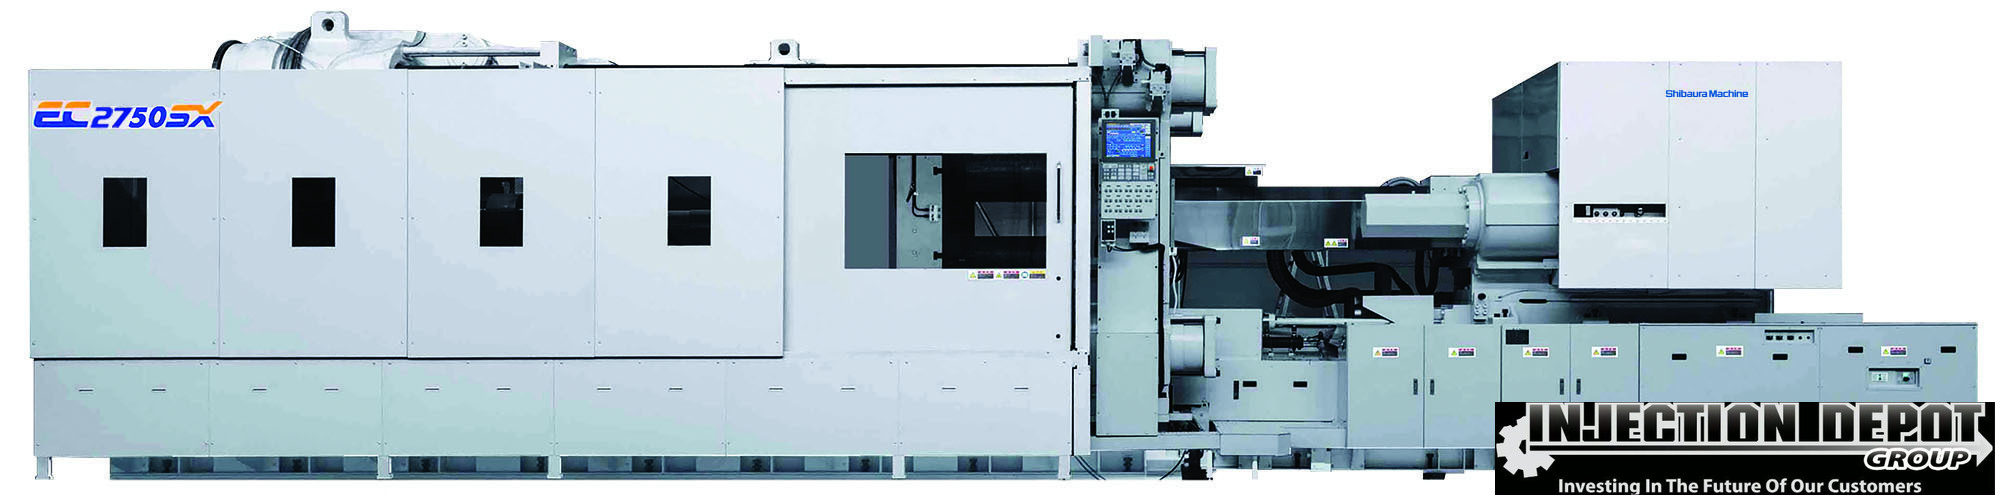 SHIBAURA MACHINE EC2750SXIIIV70-i215 AM Horizontal Injection Moulding Machines | INJECTION DEPOT GROUP